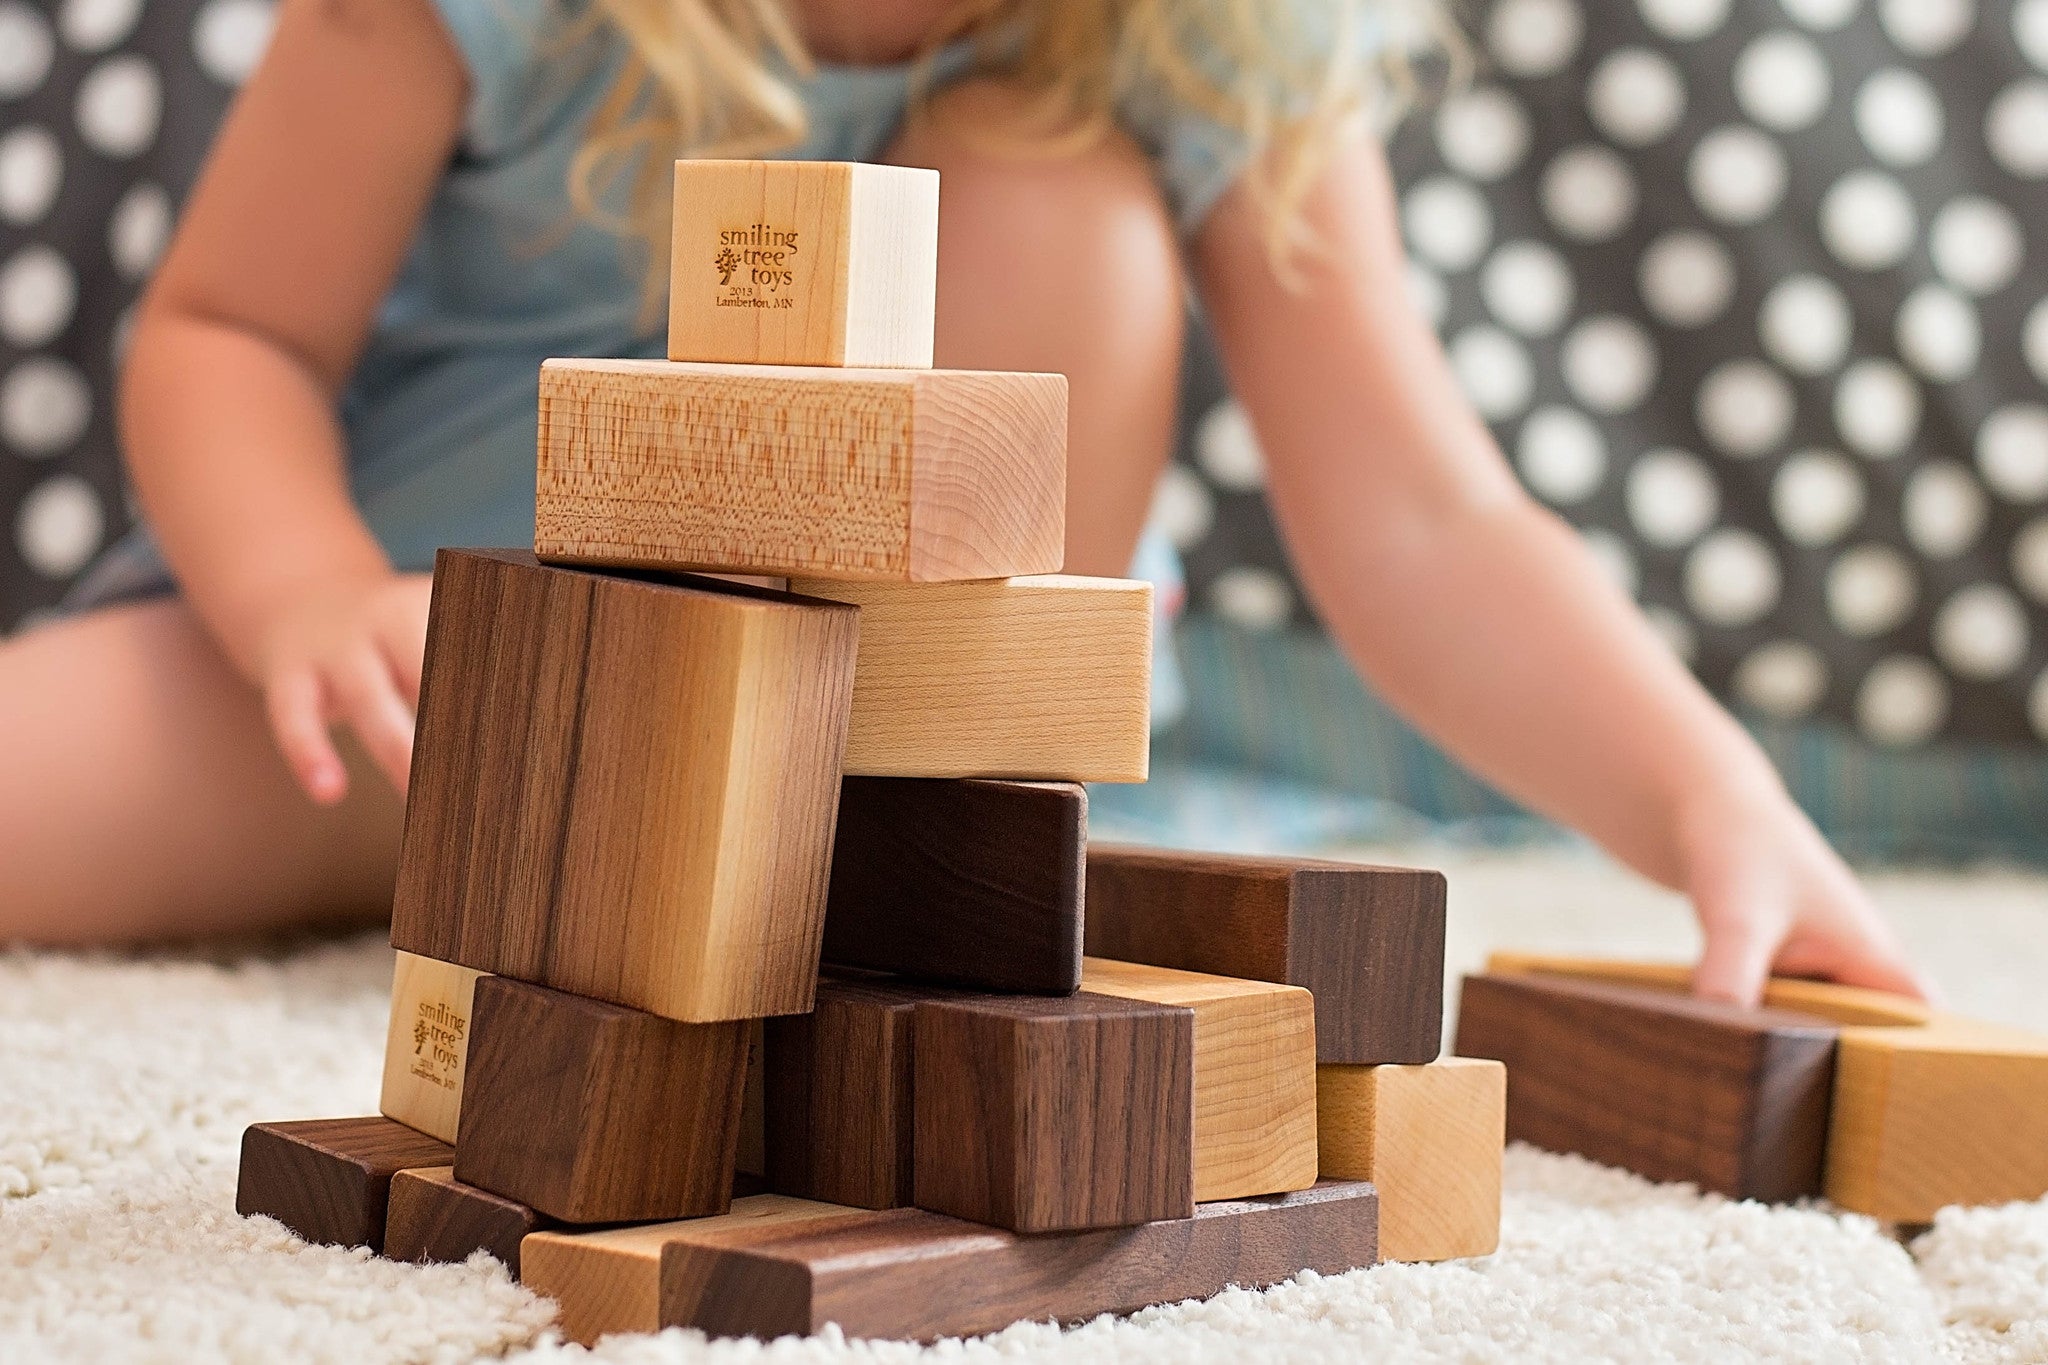 24-piece building blocks